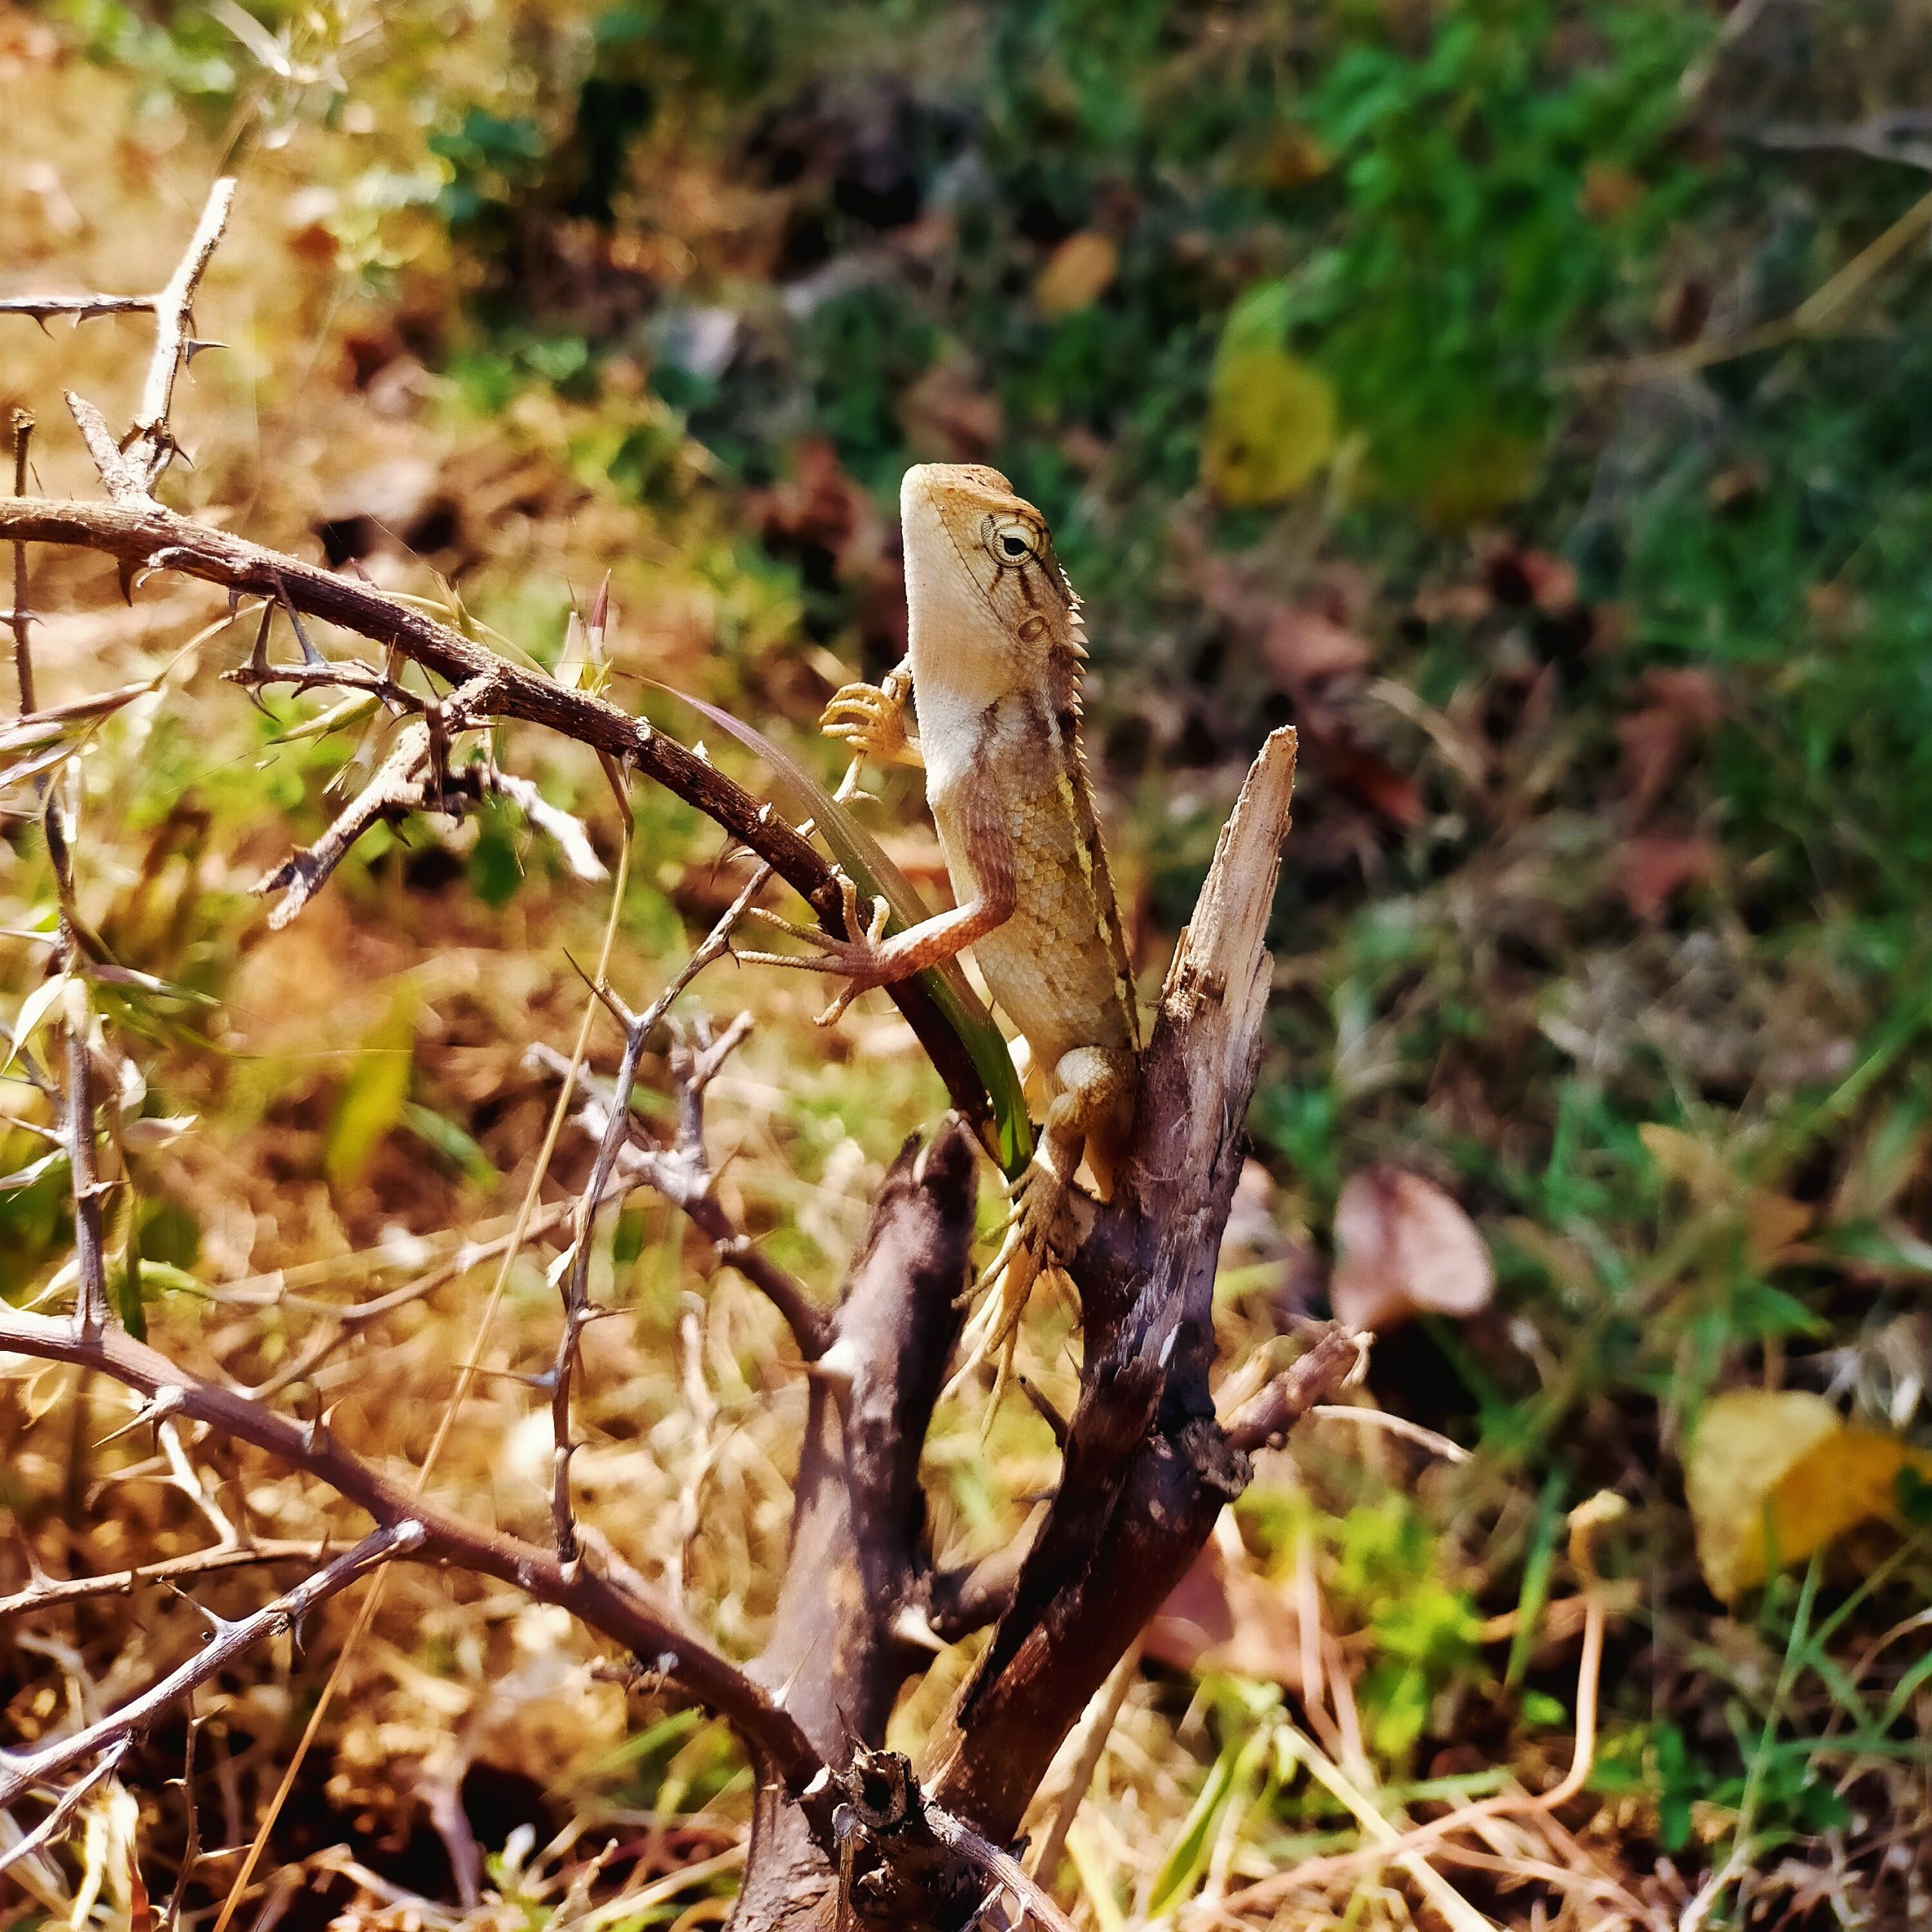 A garden lizard on thorny plant